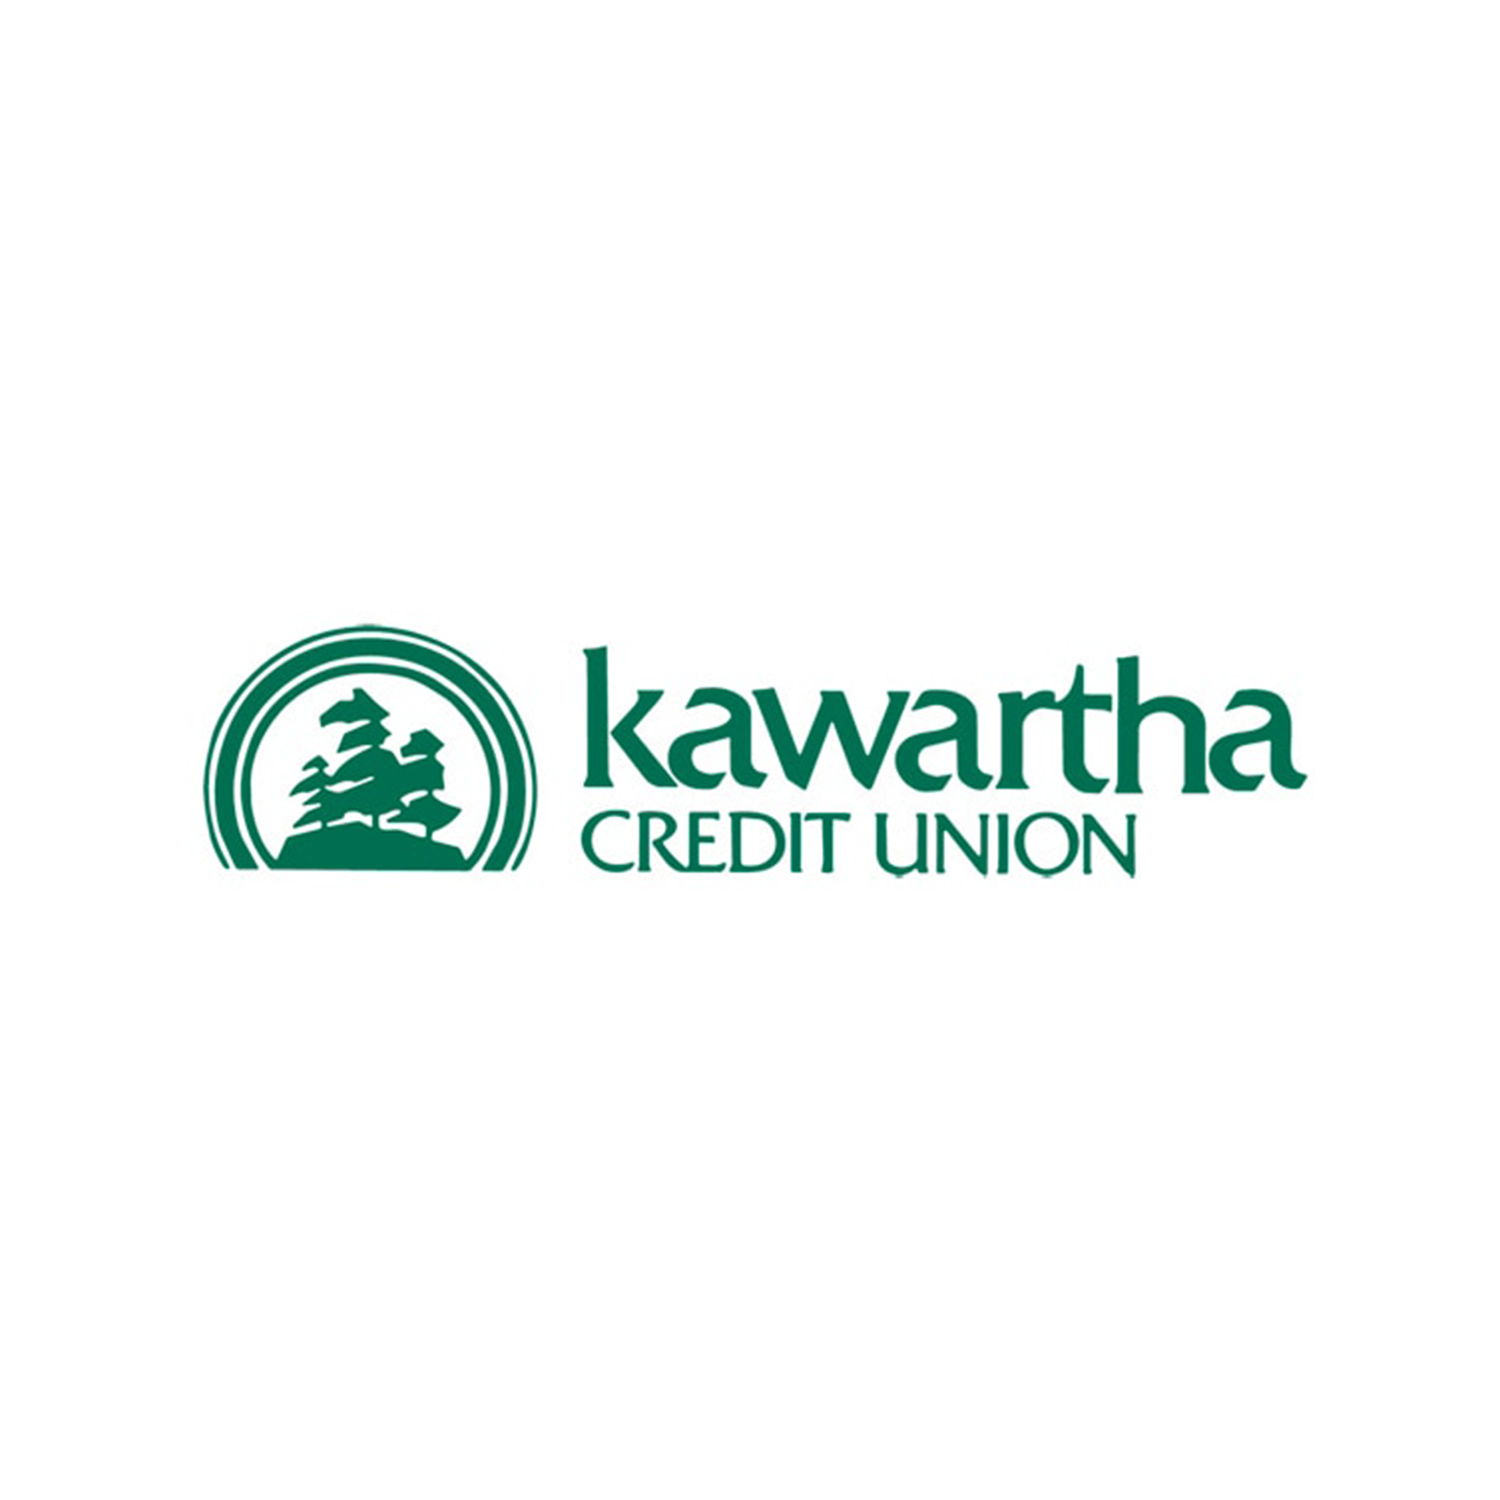 kawartha credit union